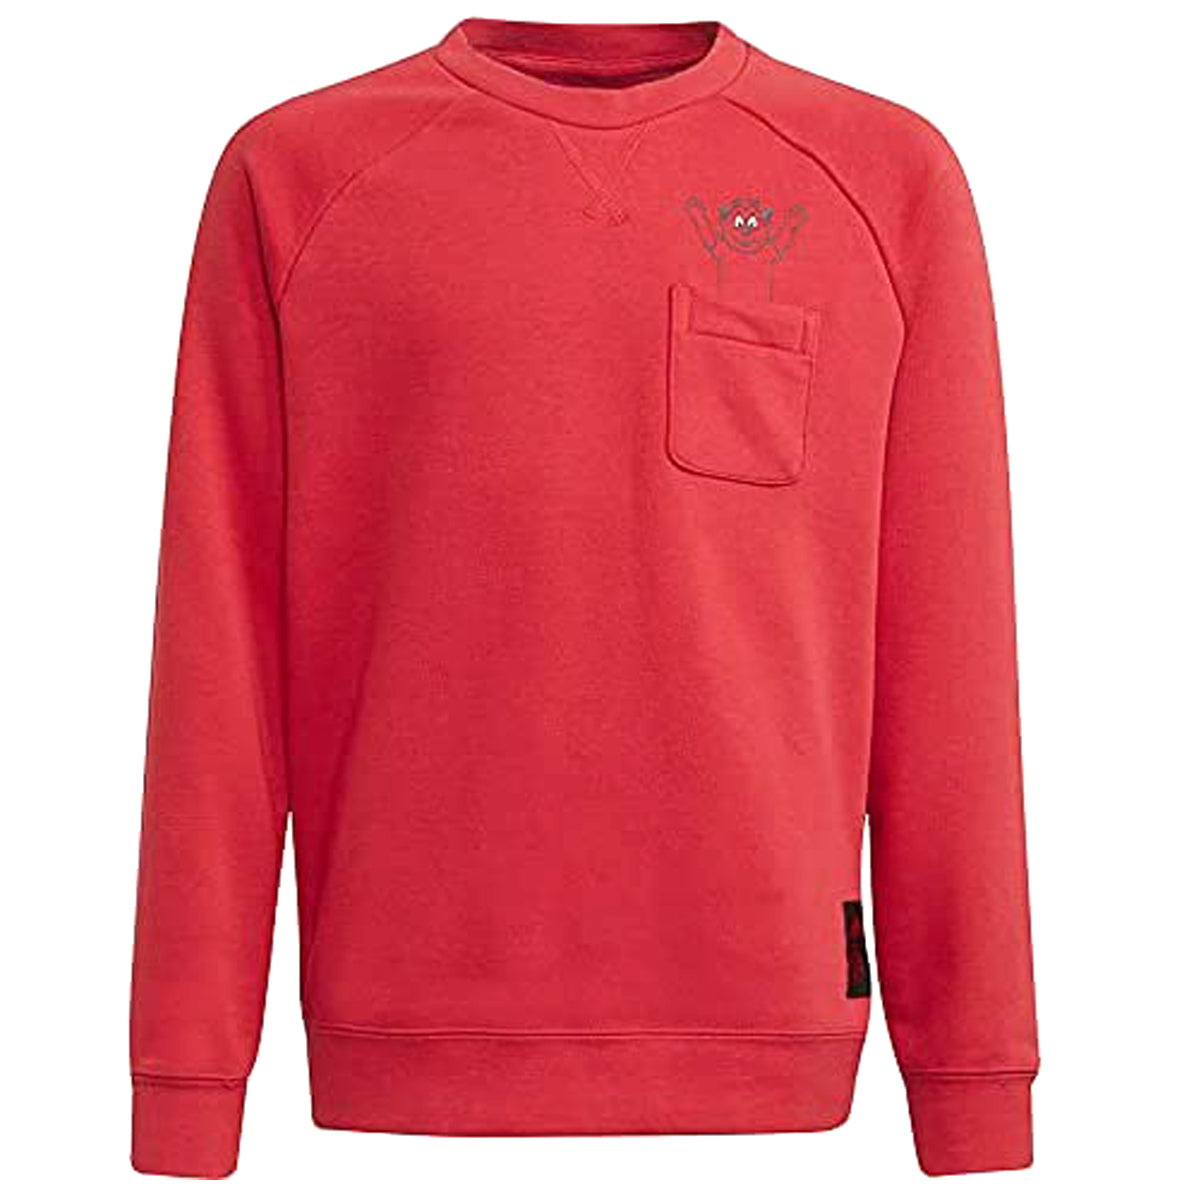 adidas Kids Manchester United Crew Sweatshirt | GR3885 Sweatshirt Adidas Youth Medium REAL RED 